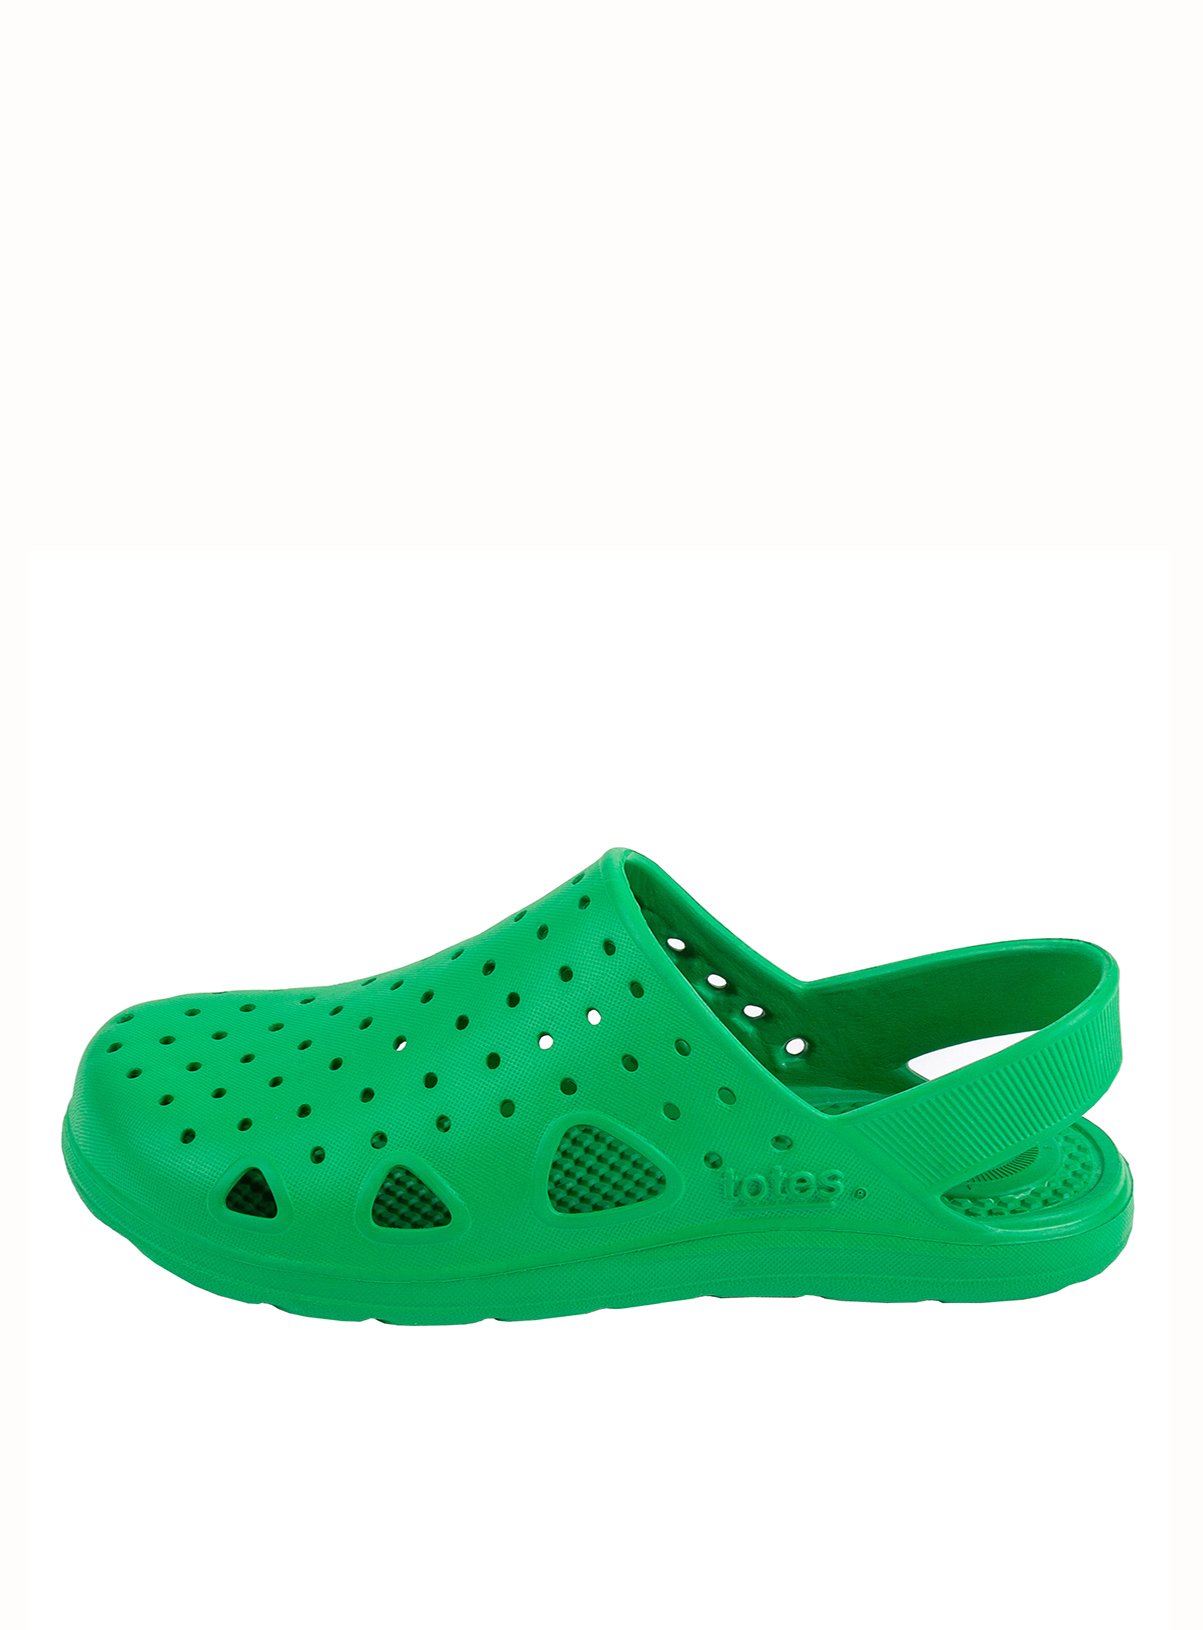 clogs green